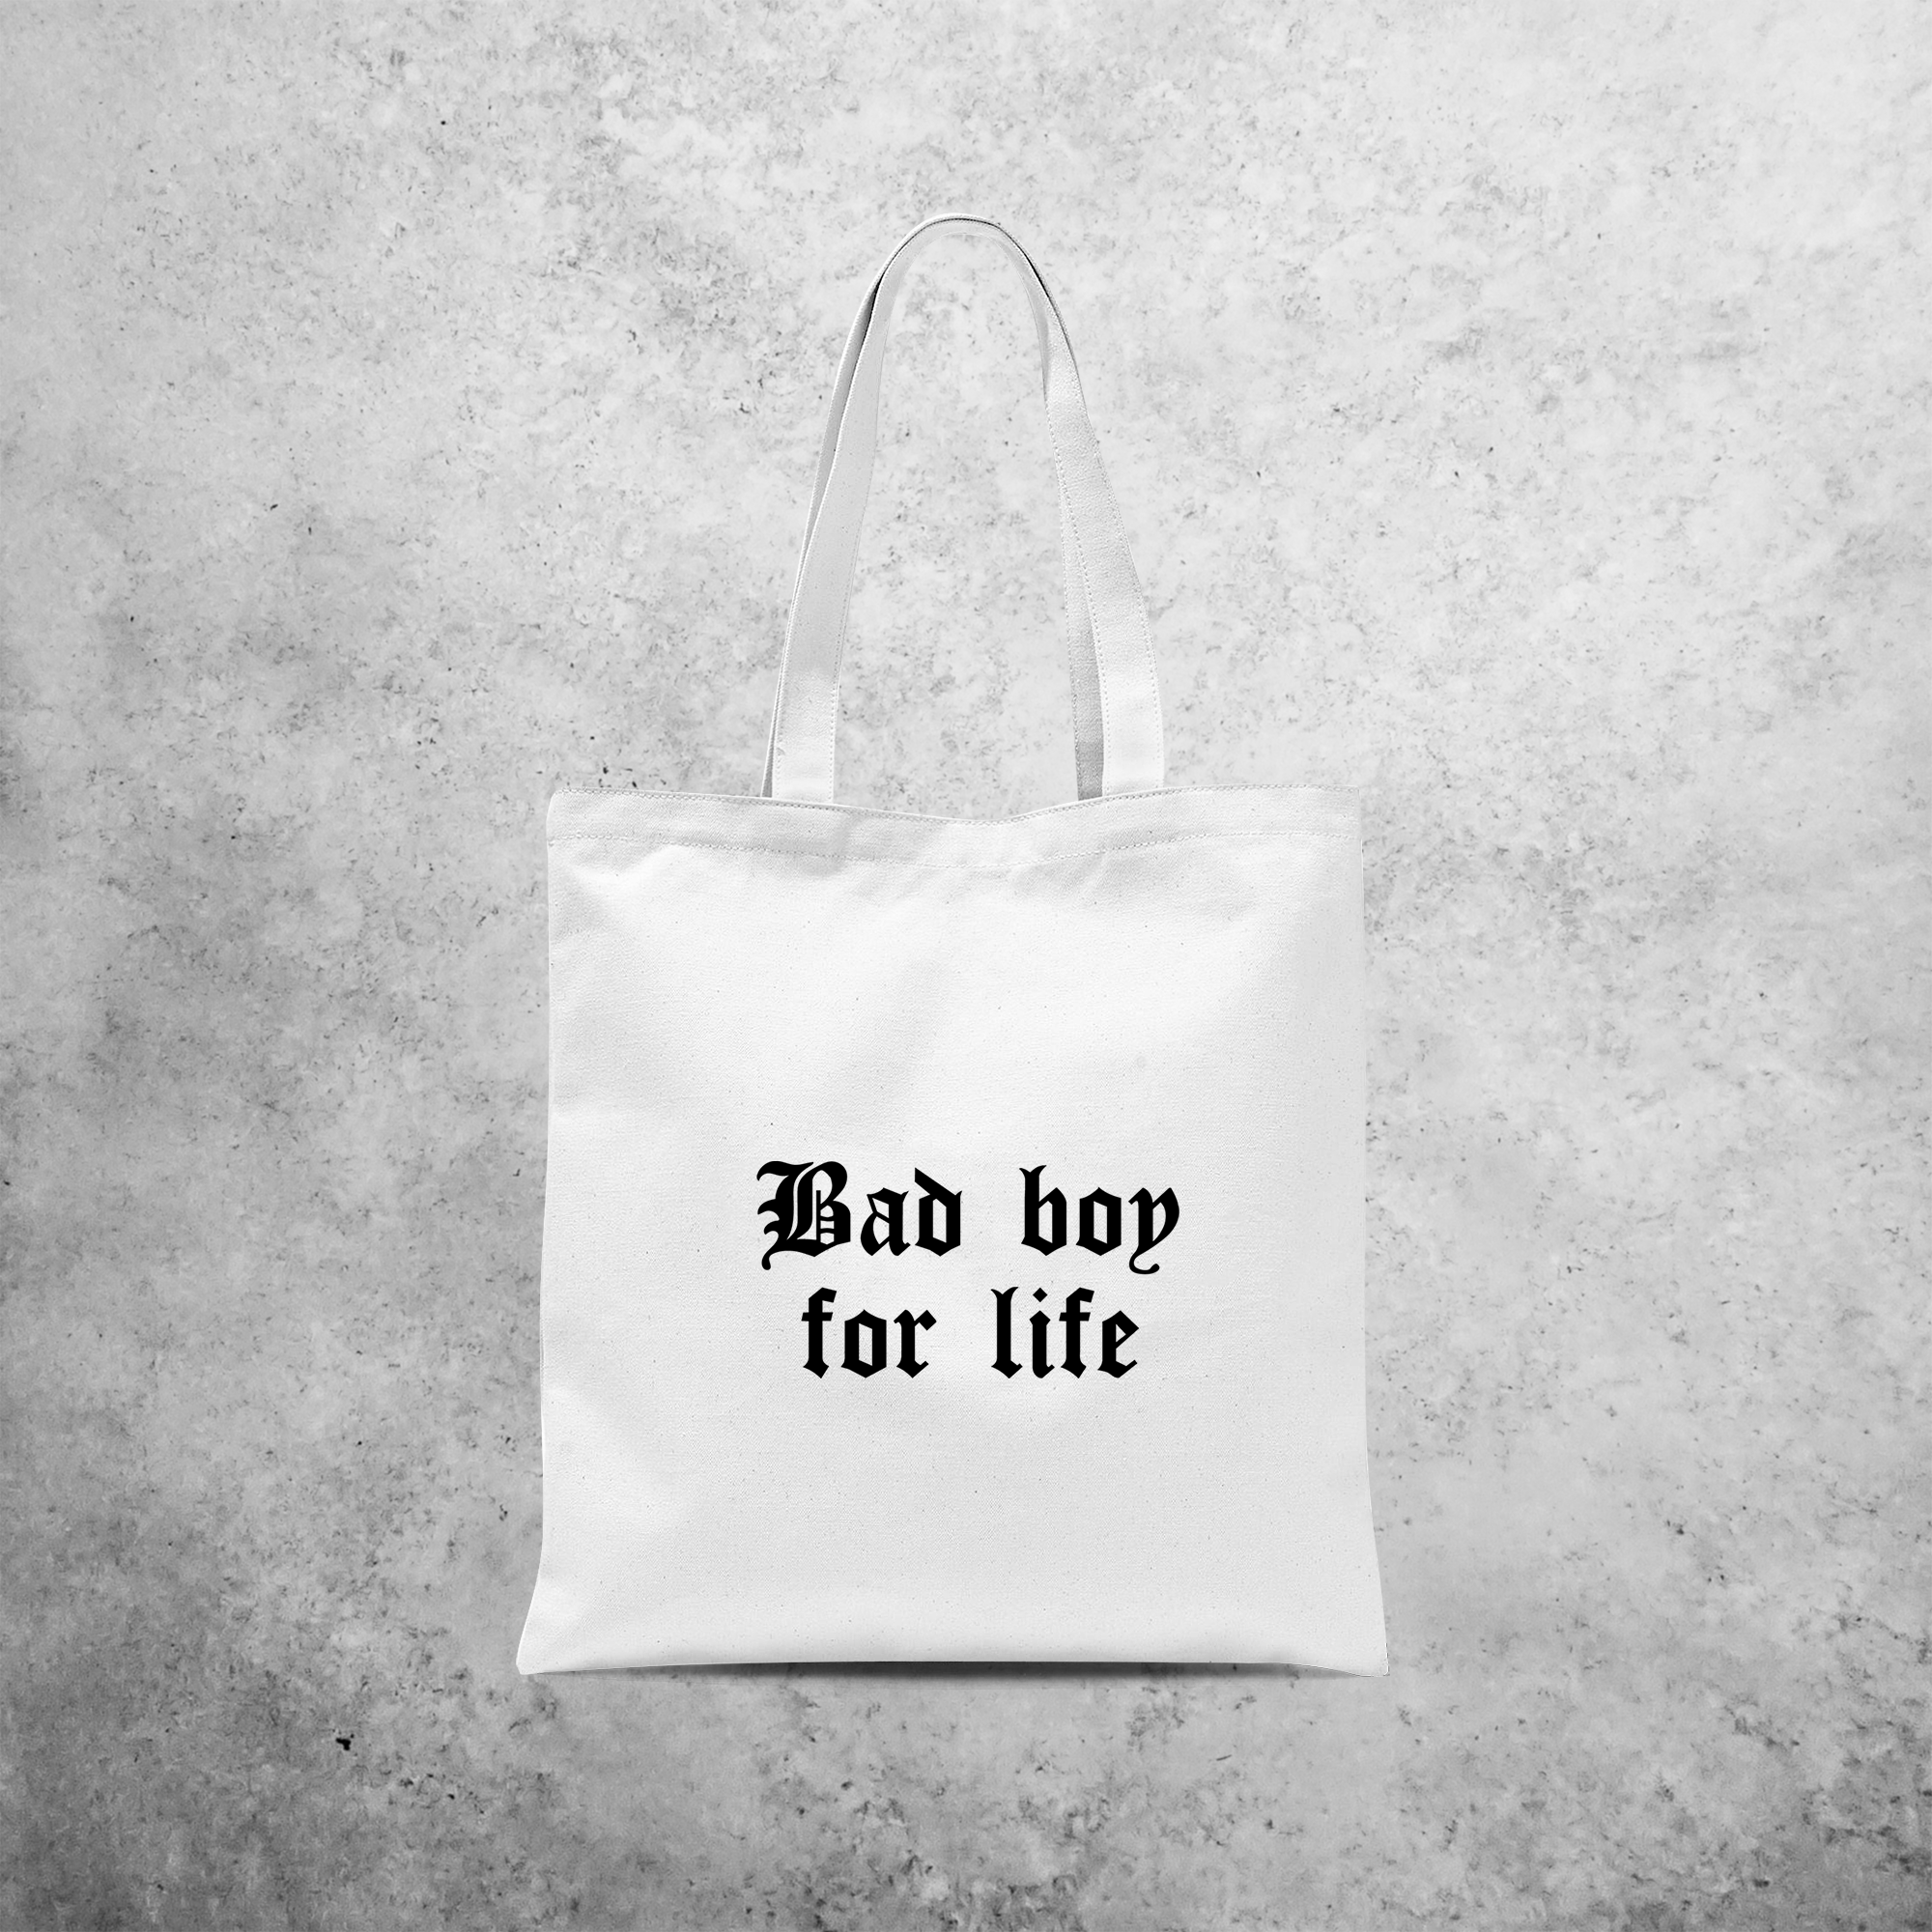 'Bad boy for life' tote bag